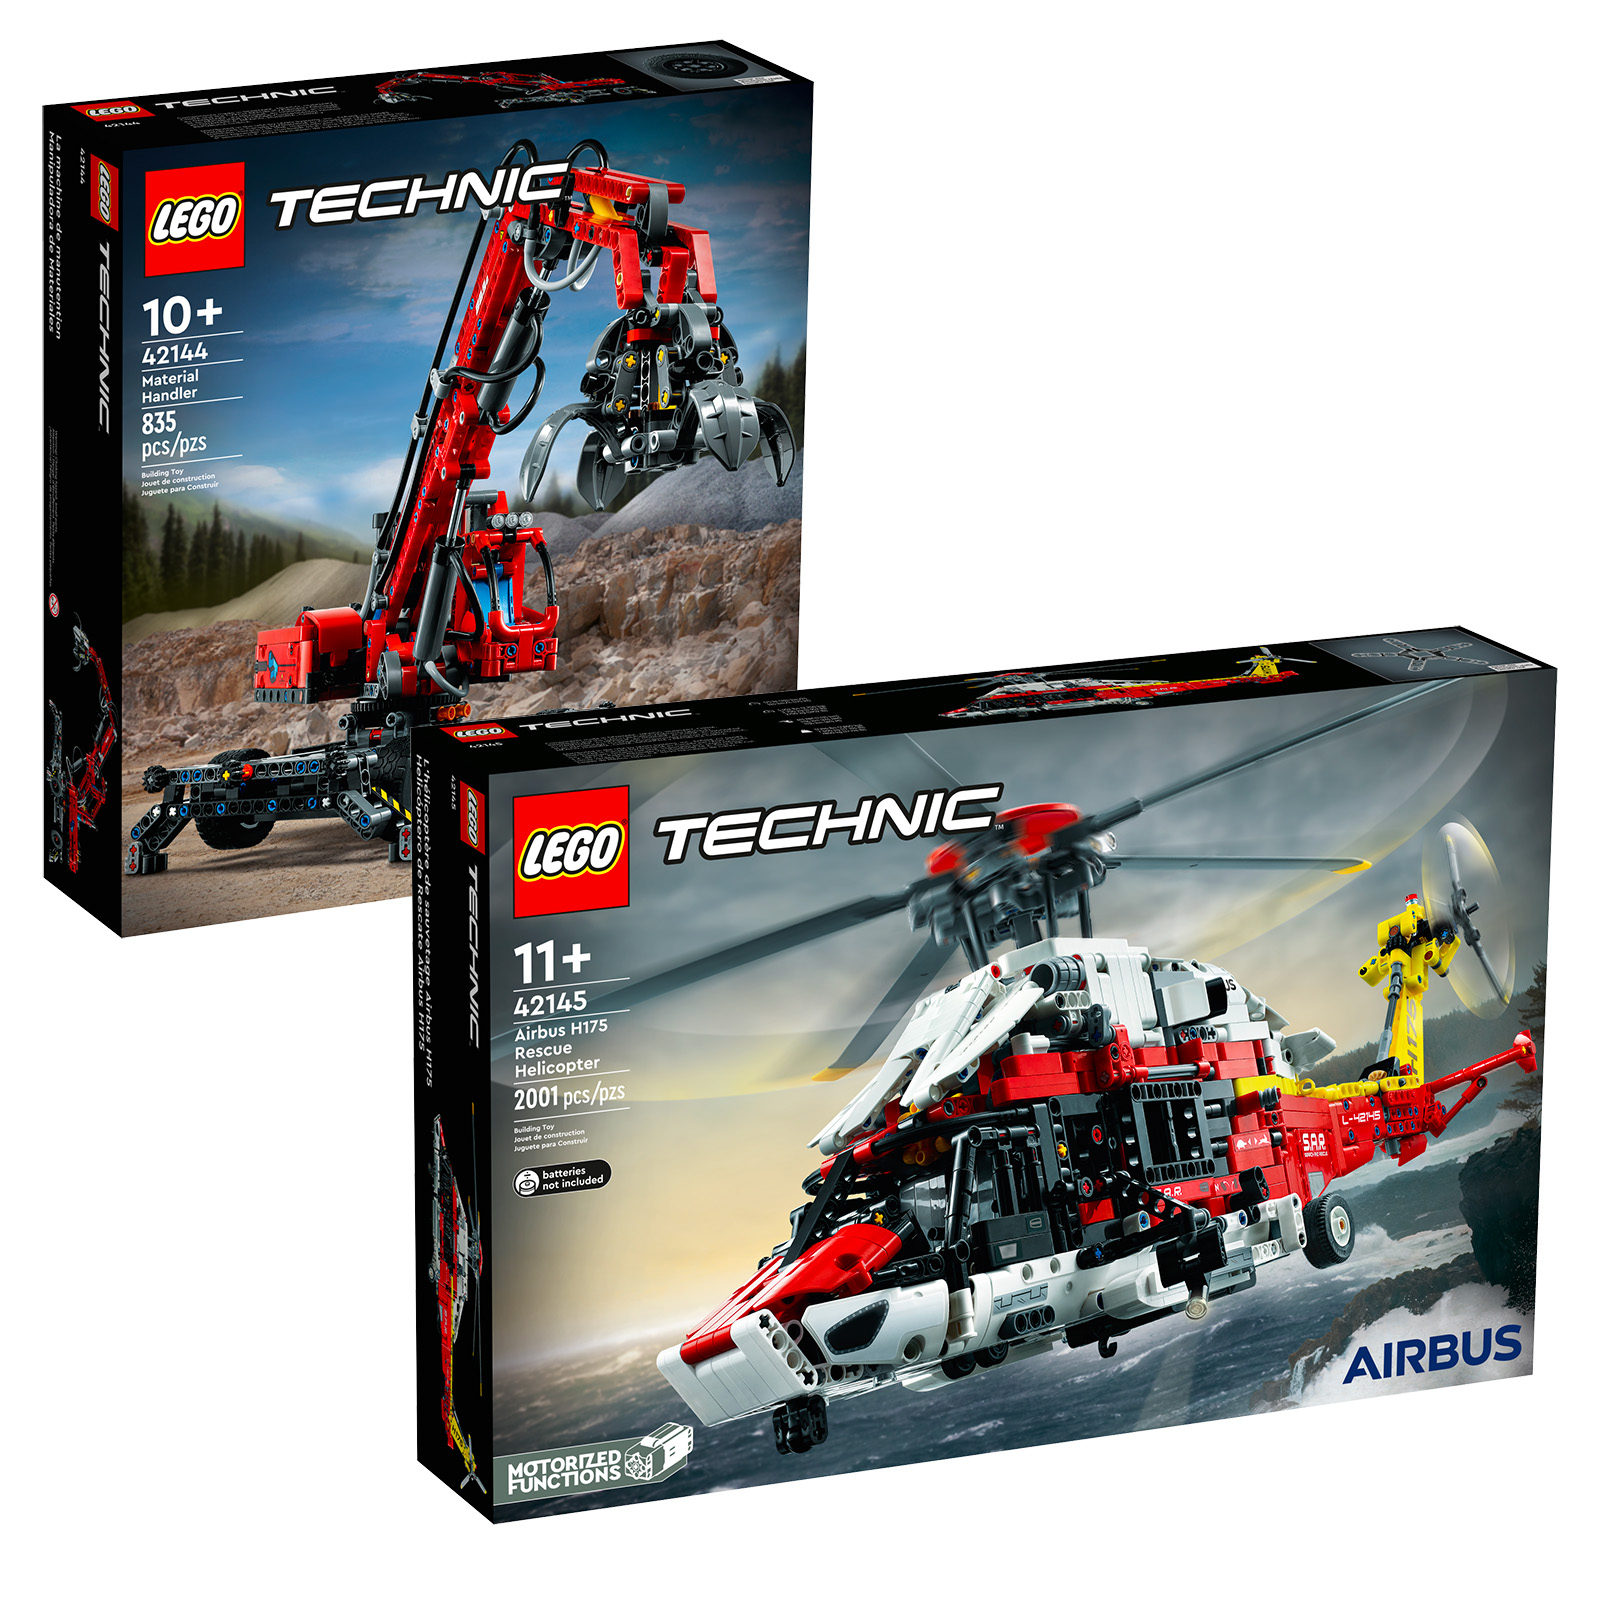 LEGO Shop'ta: LEGO Technic 42144 Material Handler ve 42145 Airbus H175 Rescue Helicopter setleri yayında